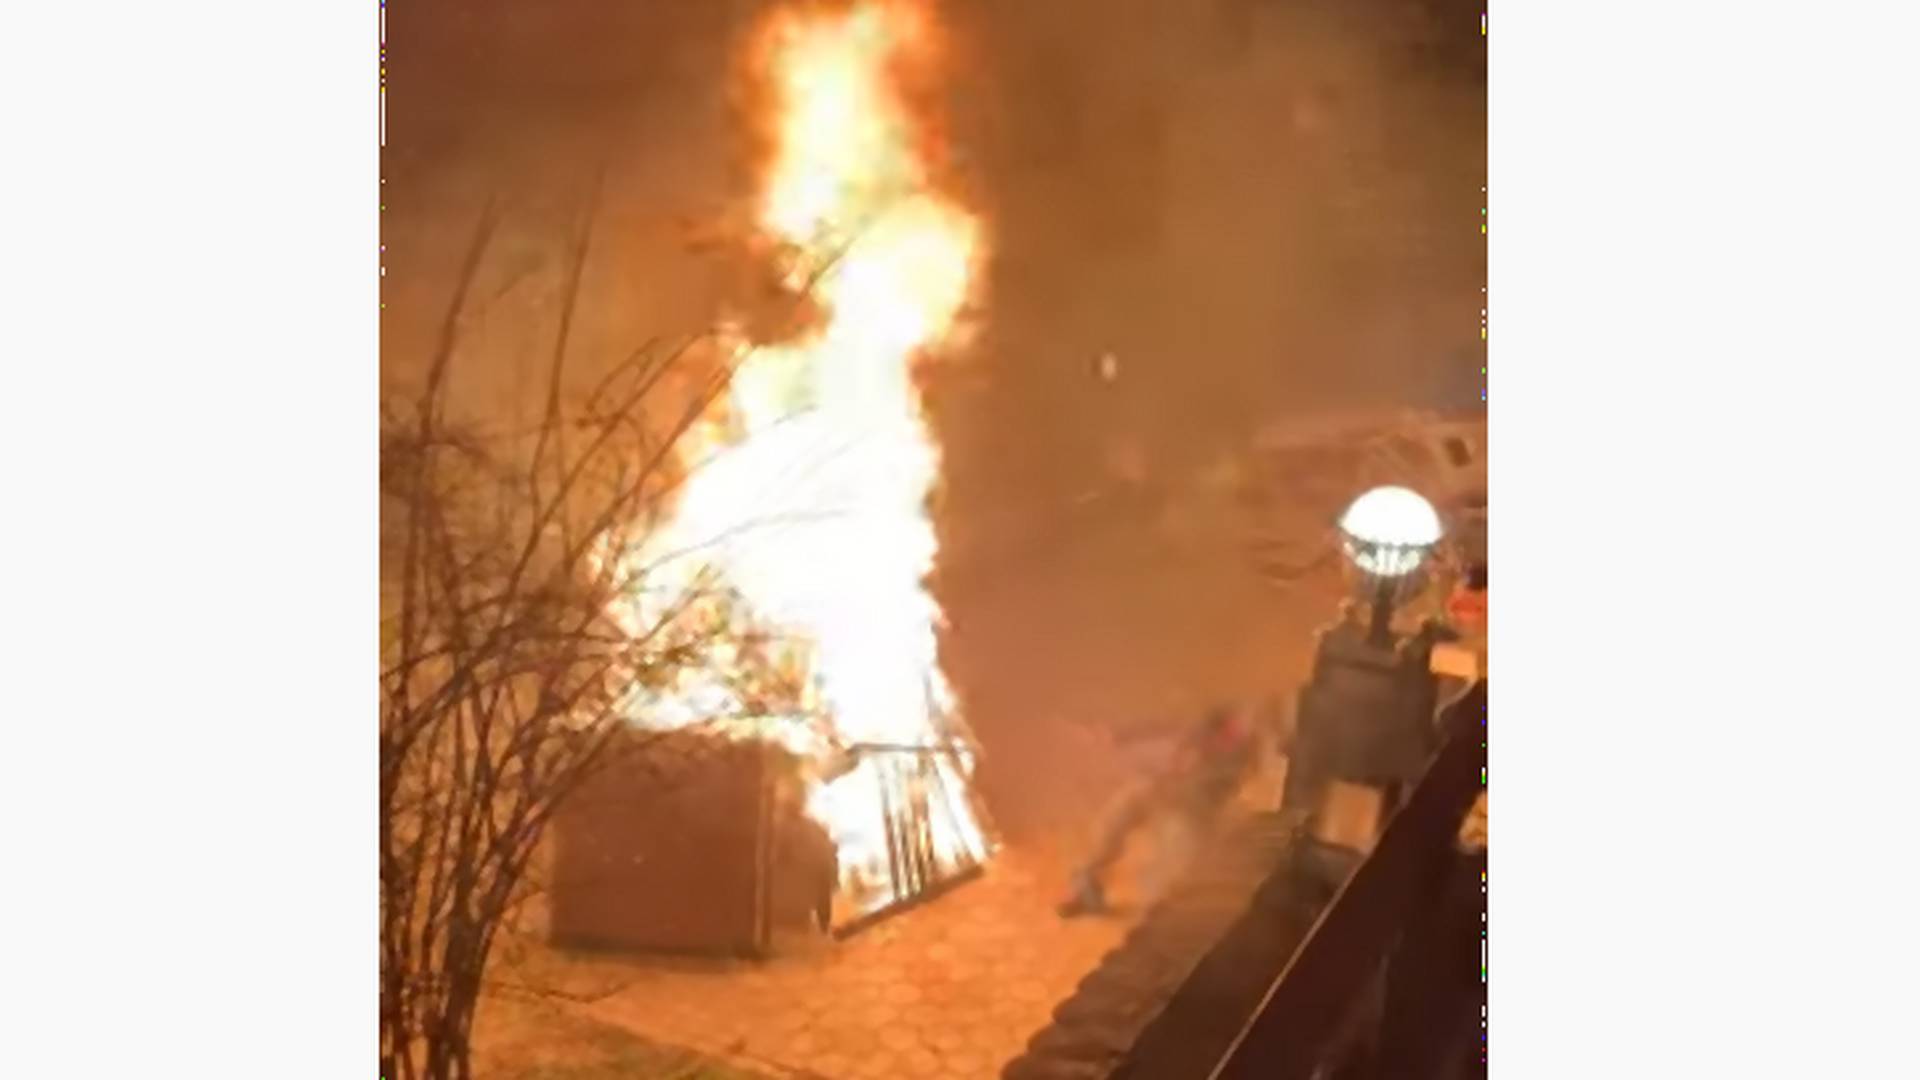 Novosađanin proslavio Badnje veče paljenjem badnjaka pa umalo zapalio ceo komšiluk